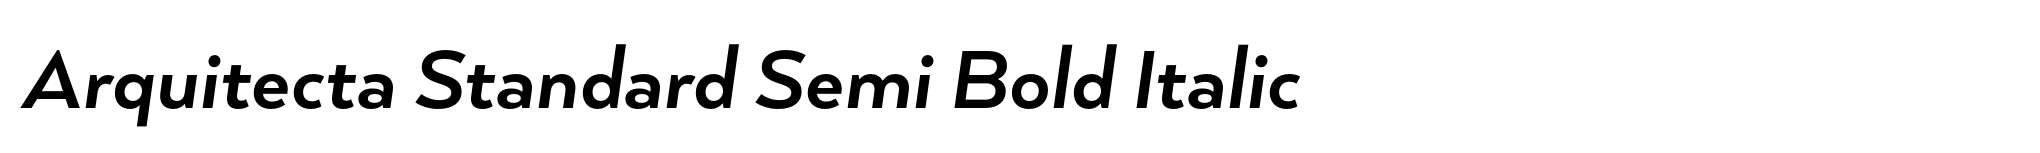 Arquitecta Standard Semi Bold Italic image